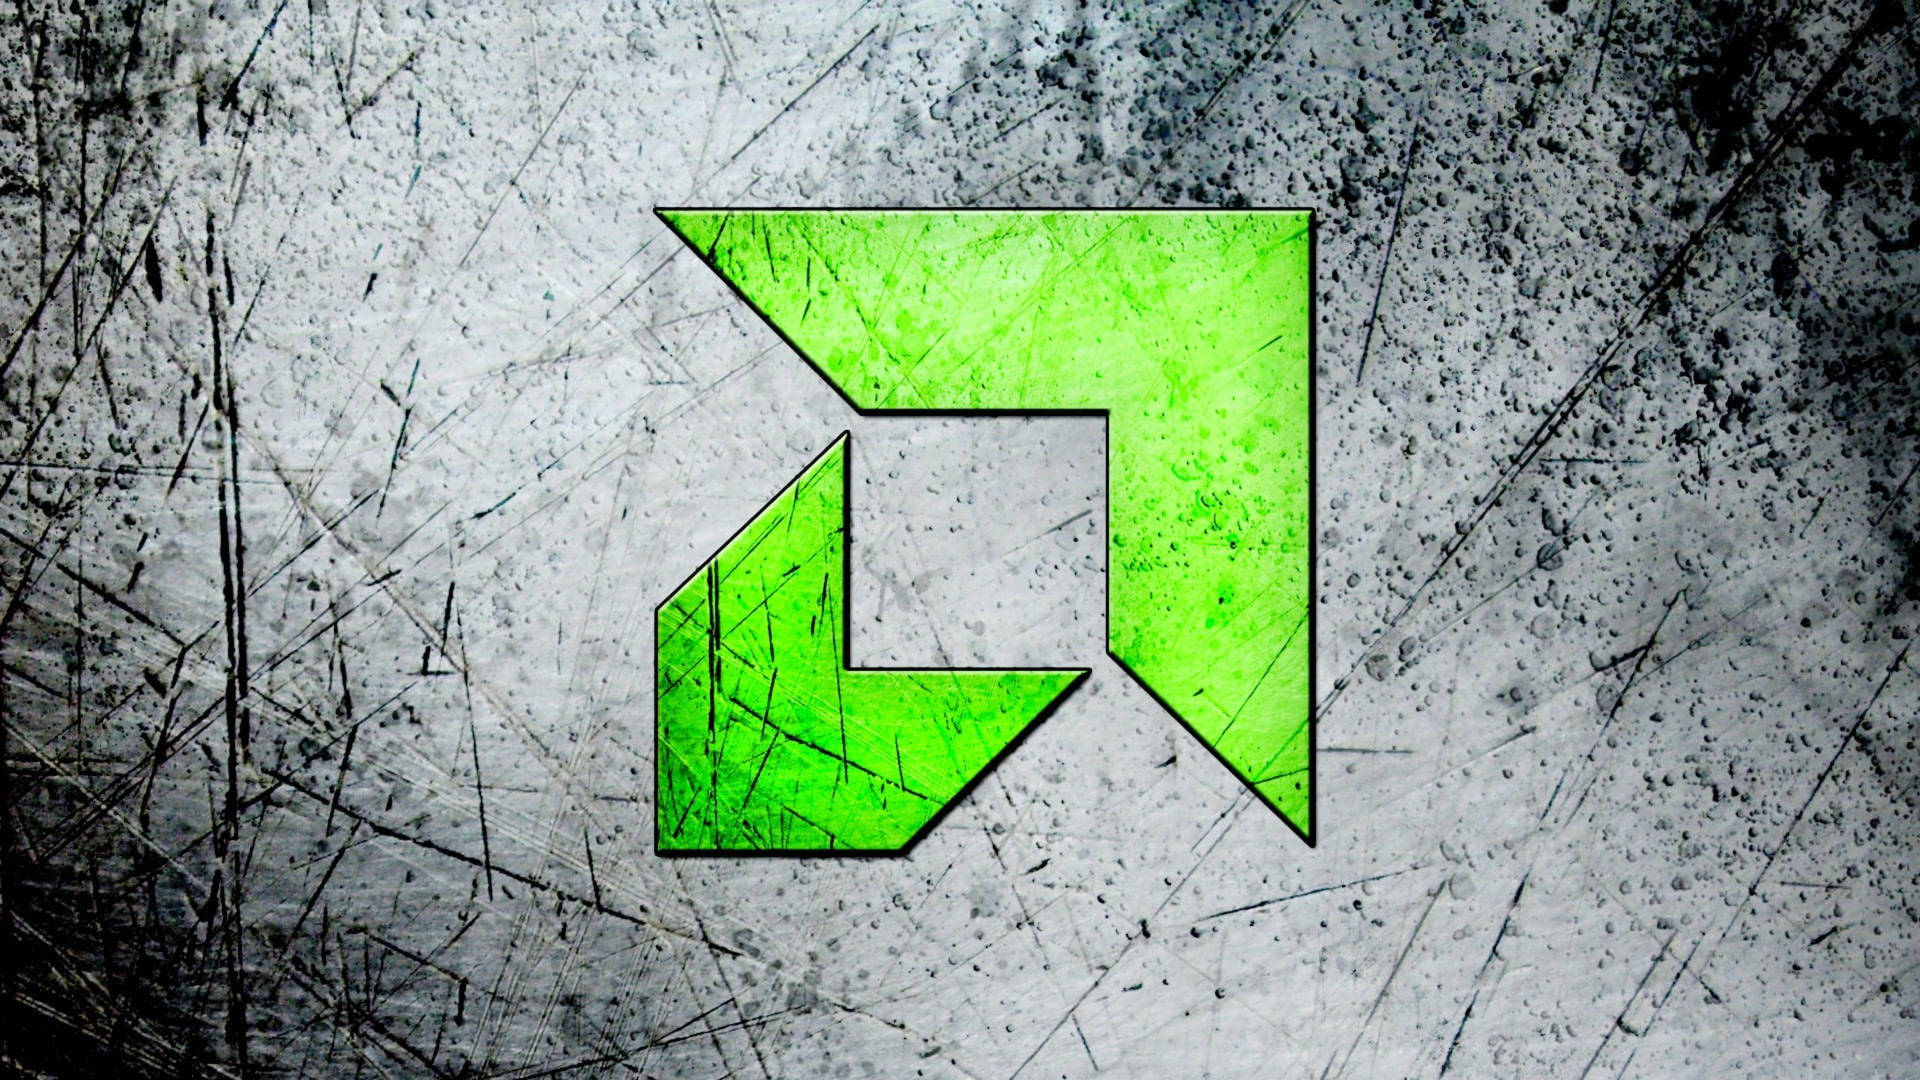 Caption: Amd Logo In Green Grunge Style Background